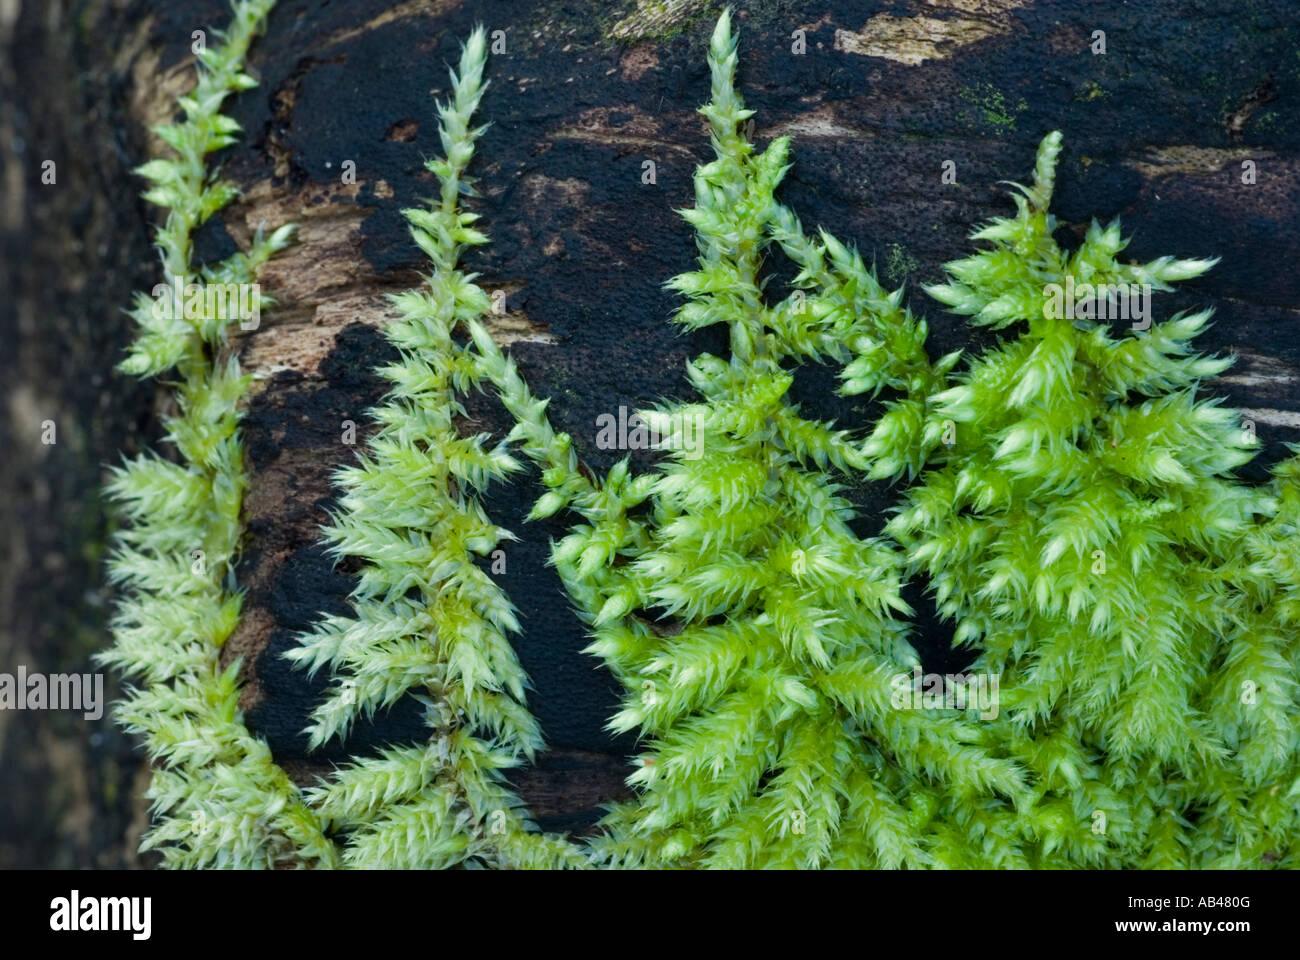 moss-brachythecium-rutabulum-on-dead-sycamore-wales-uk-AB480G.jpg